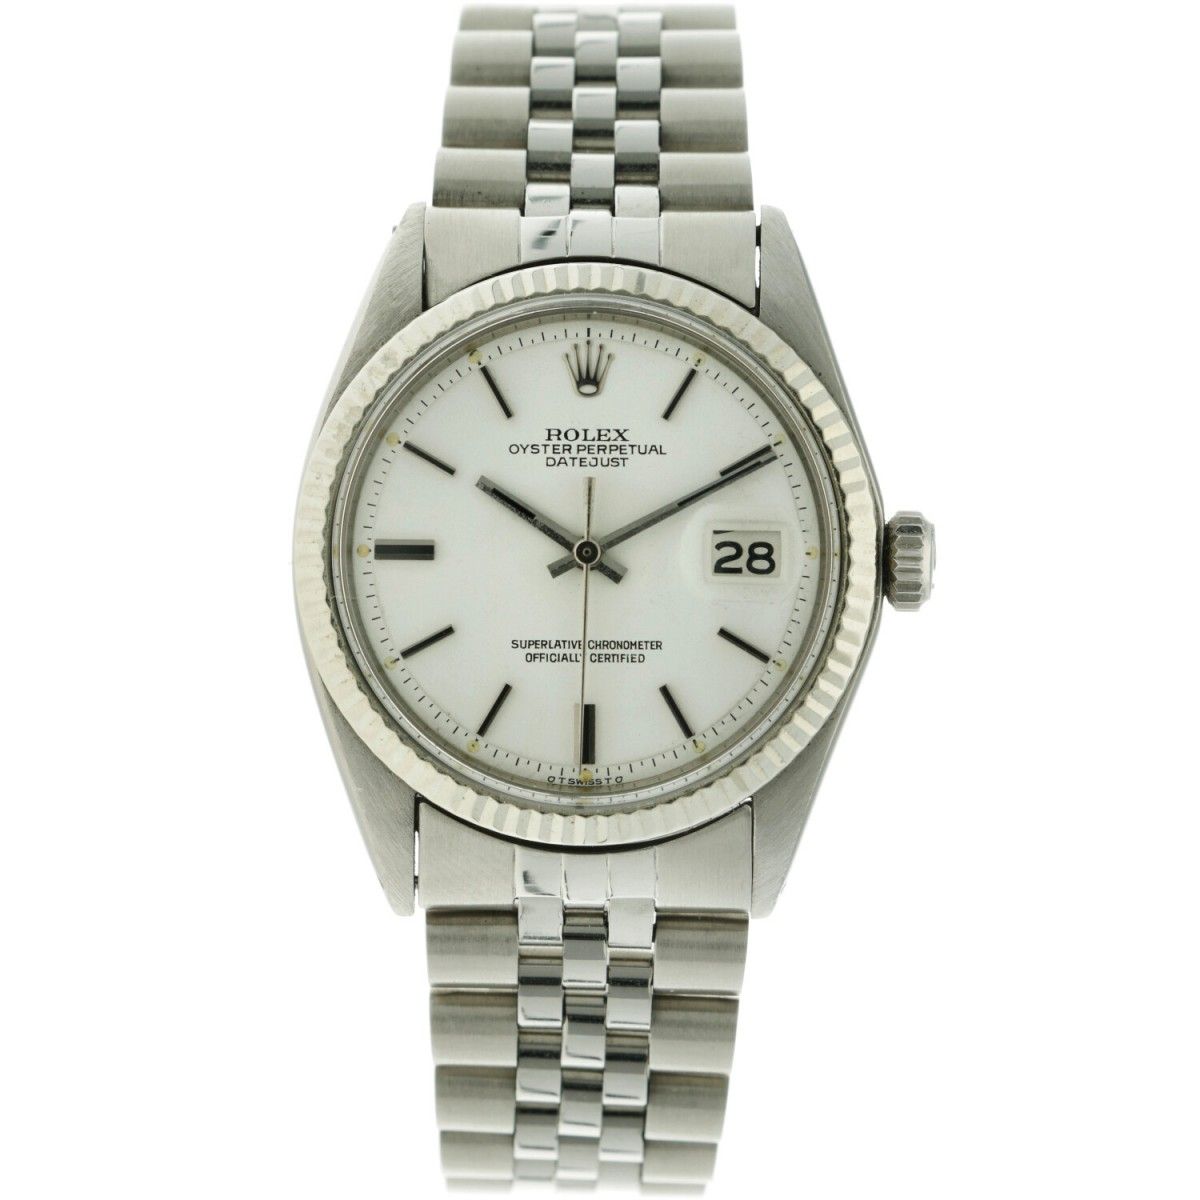 Rolex Datejust Sigma Dial 1601 - Men's watch -apprx. 1972. Gehäuse: Stahl - Armb&hellip;